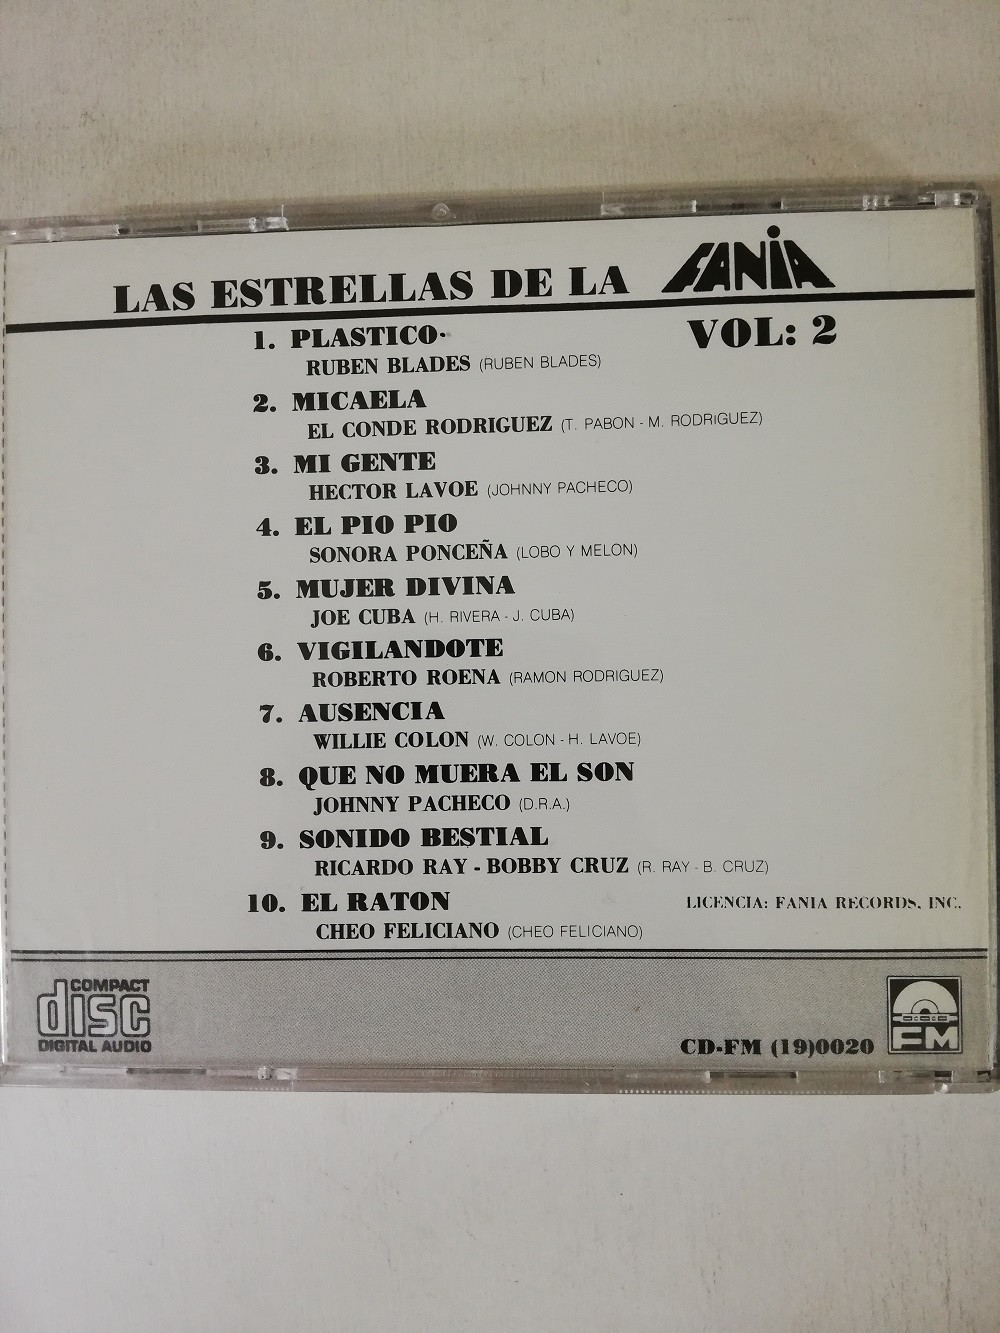 Imagen CD FANIA ALL STARS - LAS ESTRELLAS DE LA FANIA VOL. 2 2